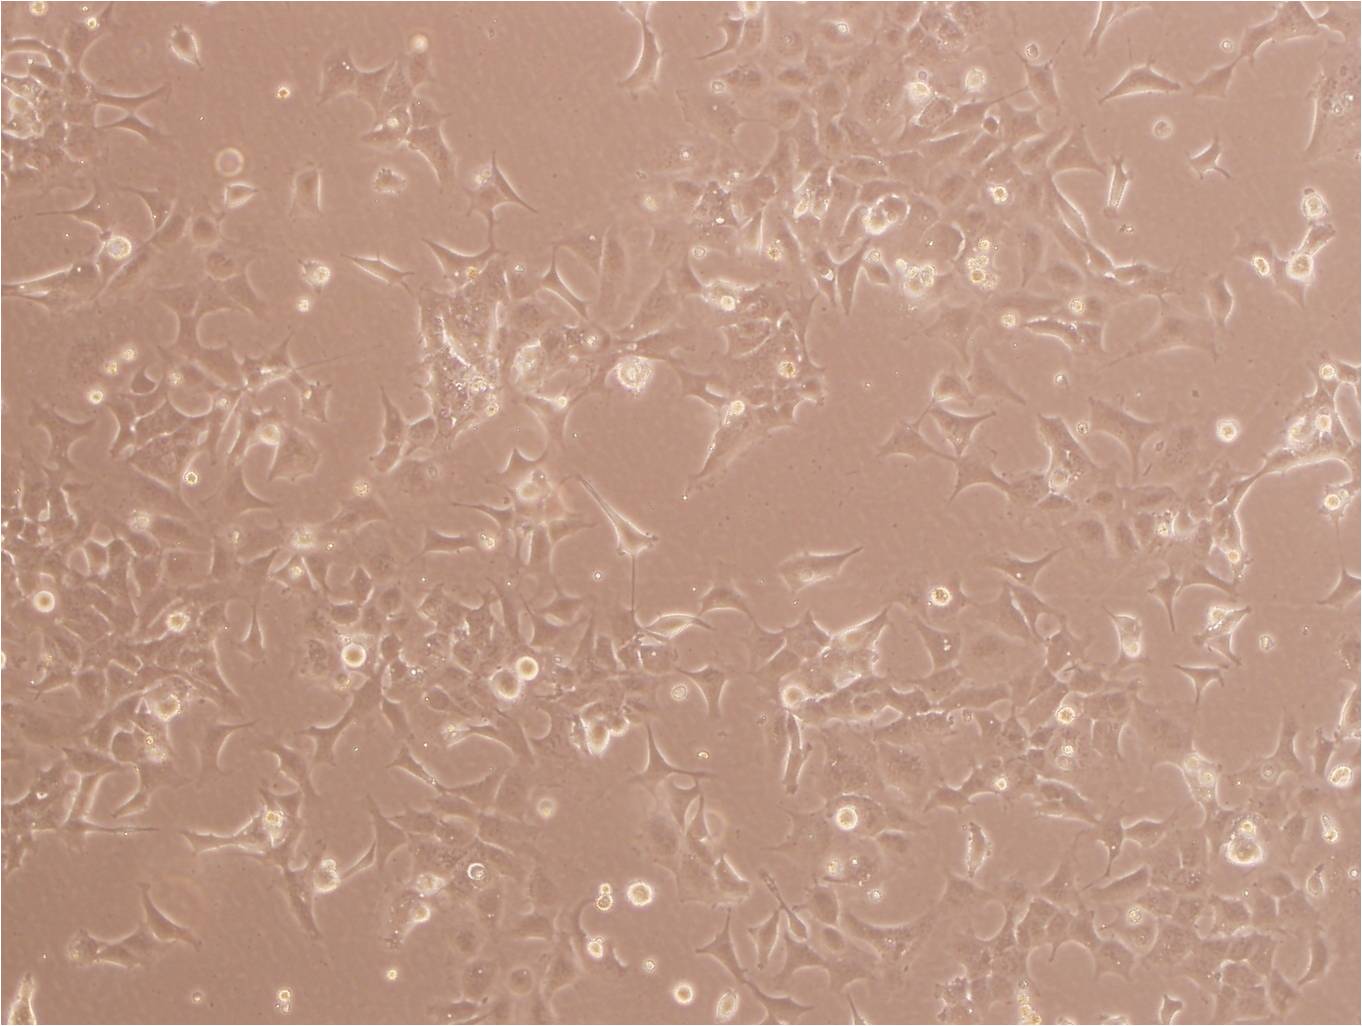 NCI-H157 Cells|人非小细胞肺腺癌细胞系,NCI-H157 Cells